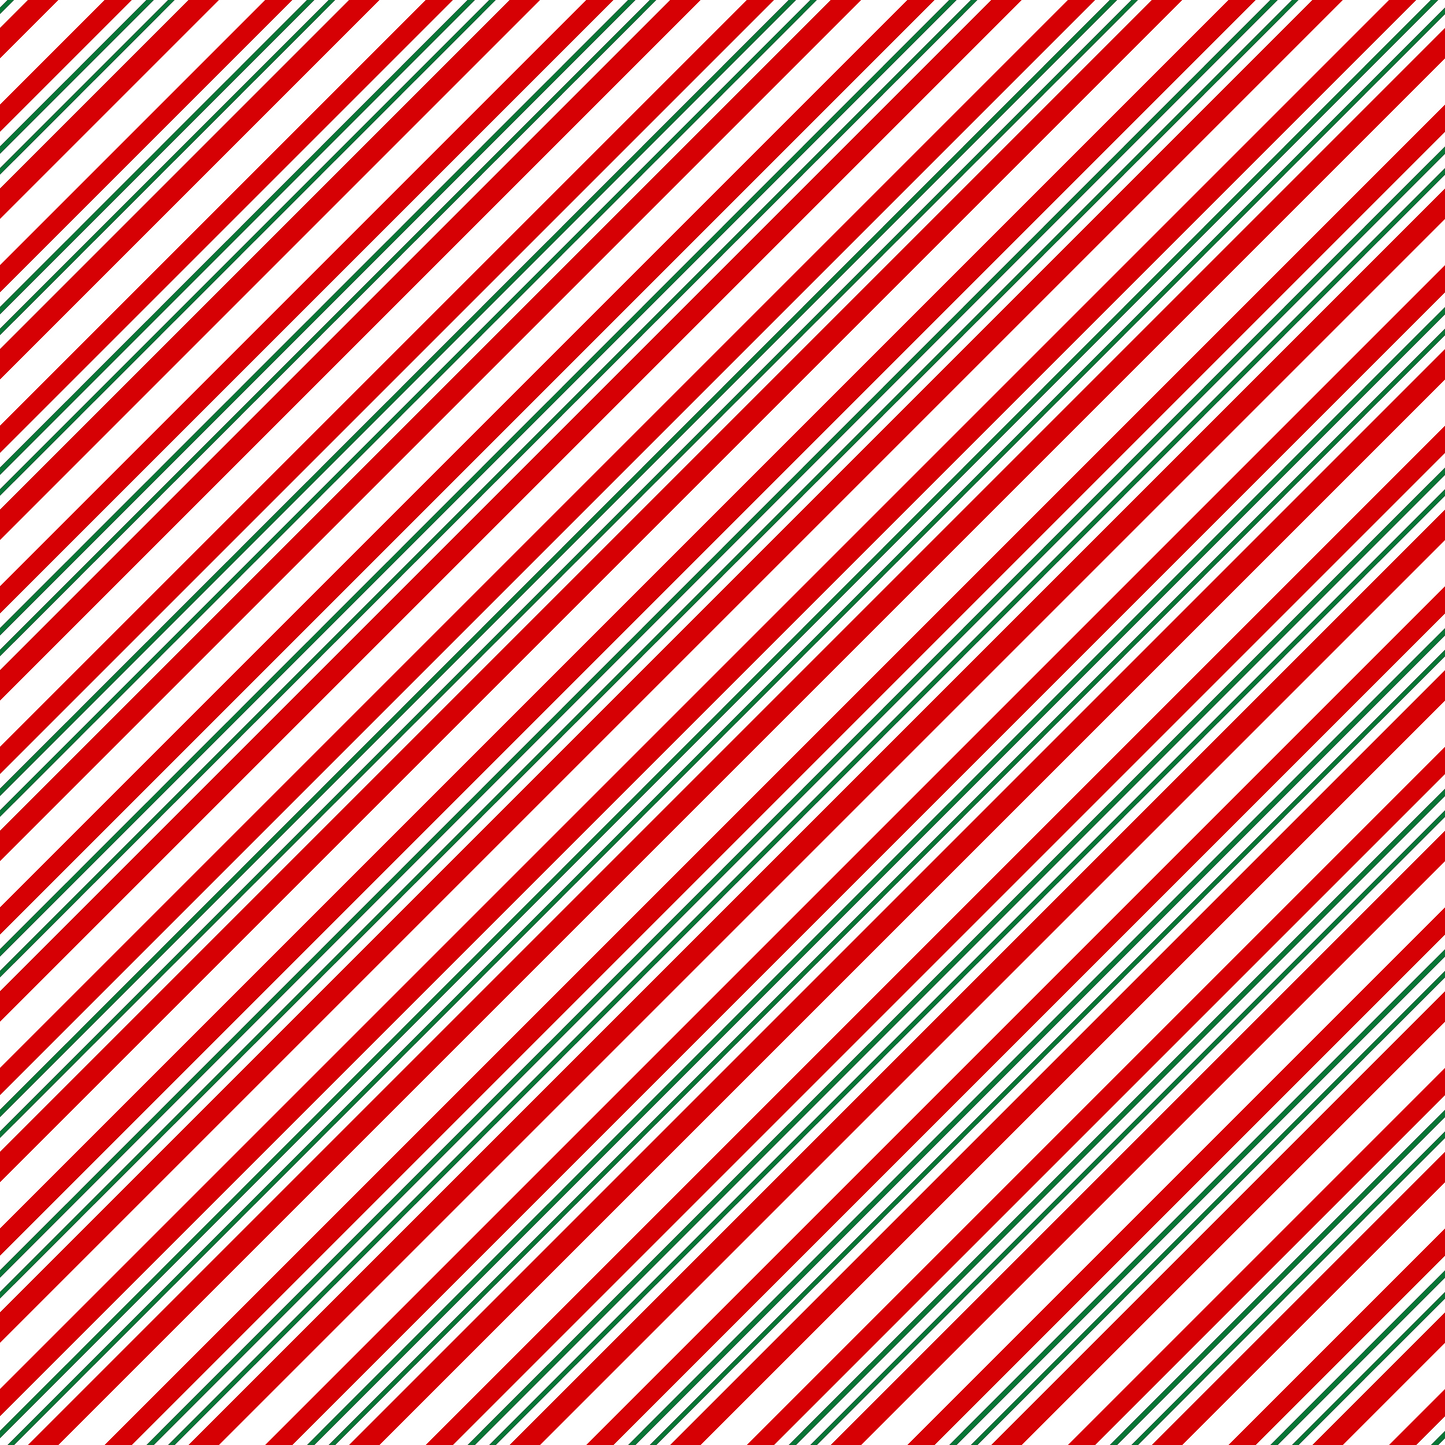 Candy Cane Stripes - Rayures rouges et vertes 011